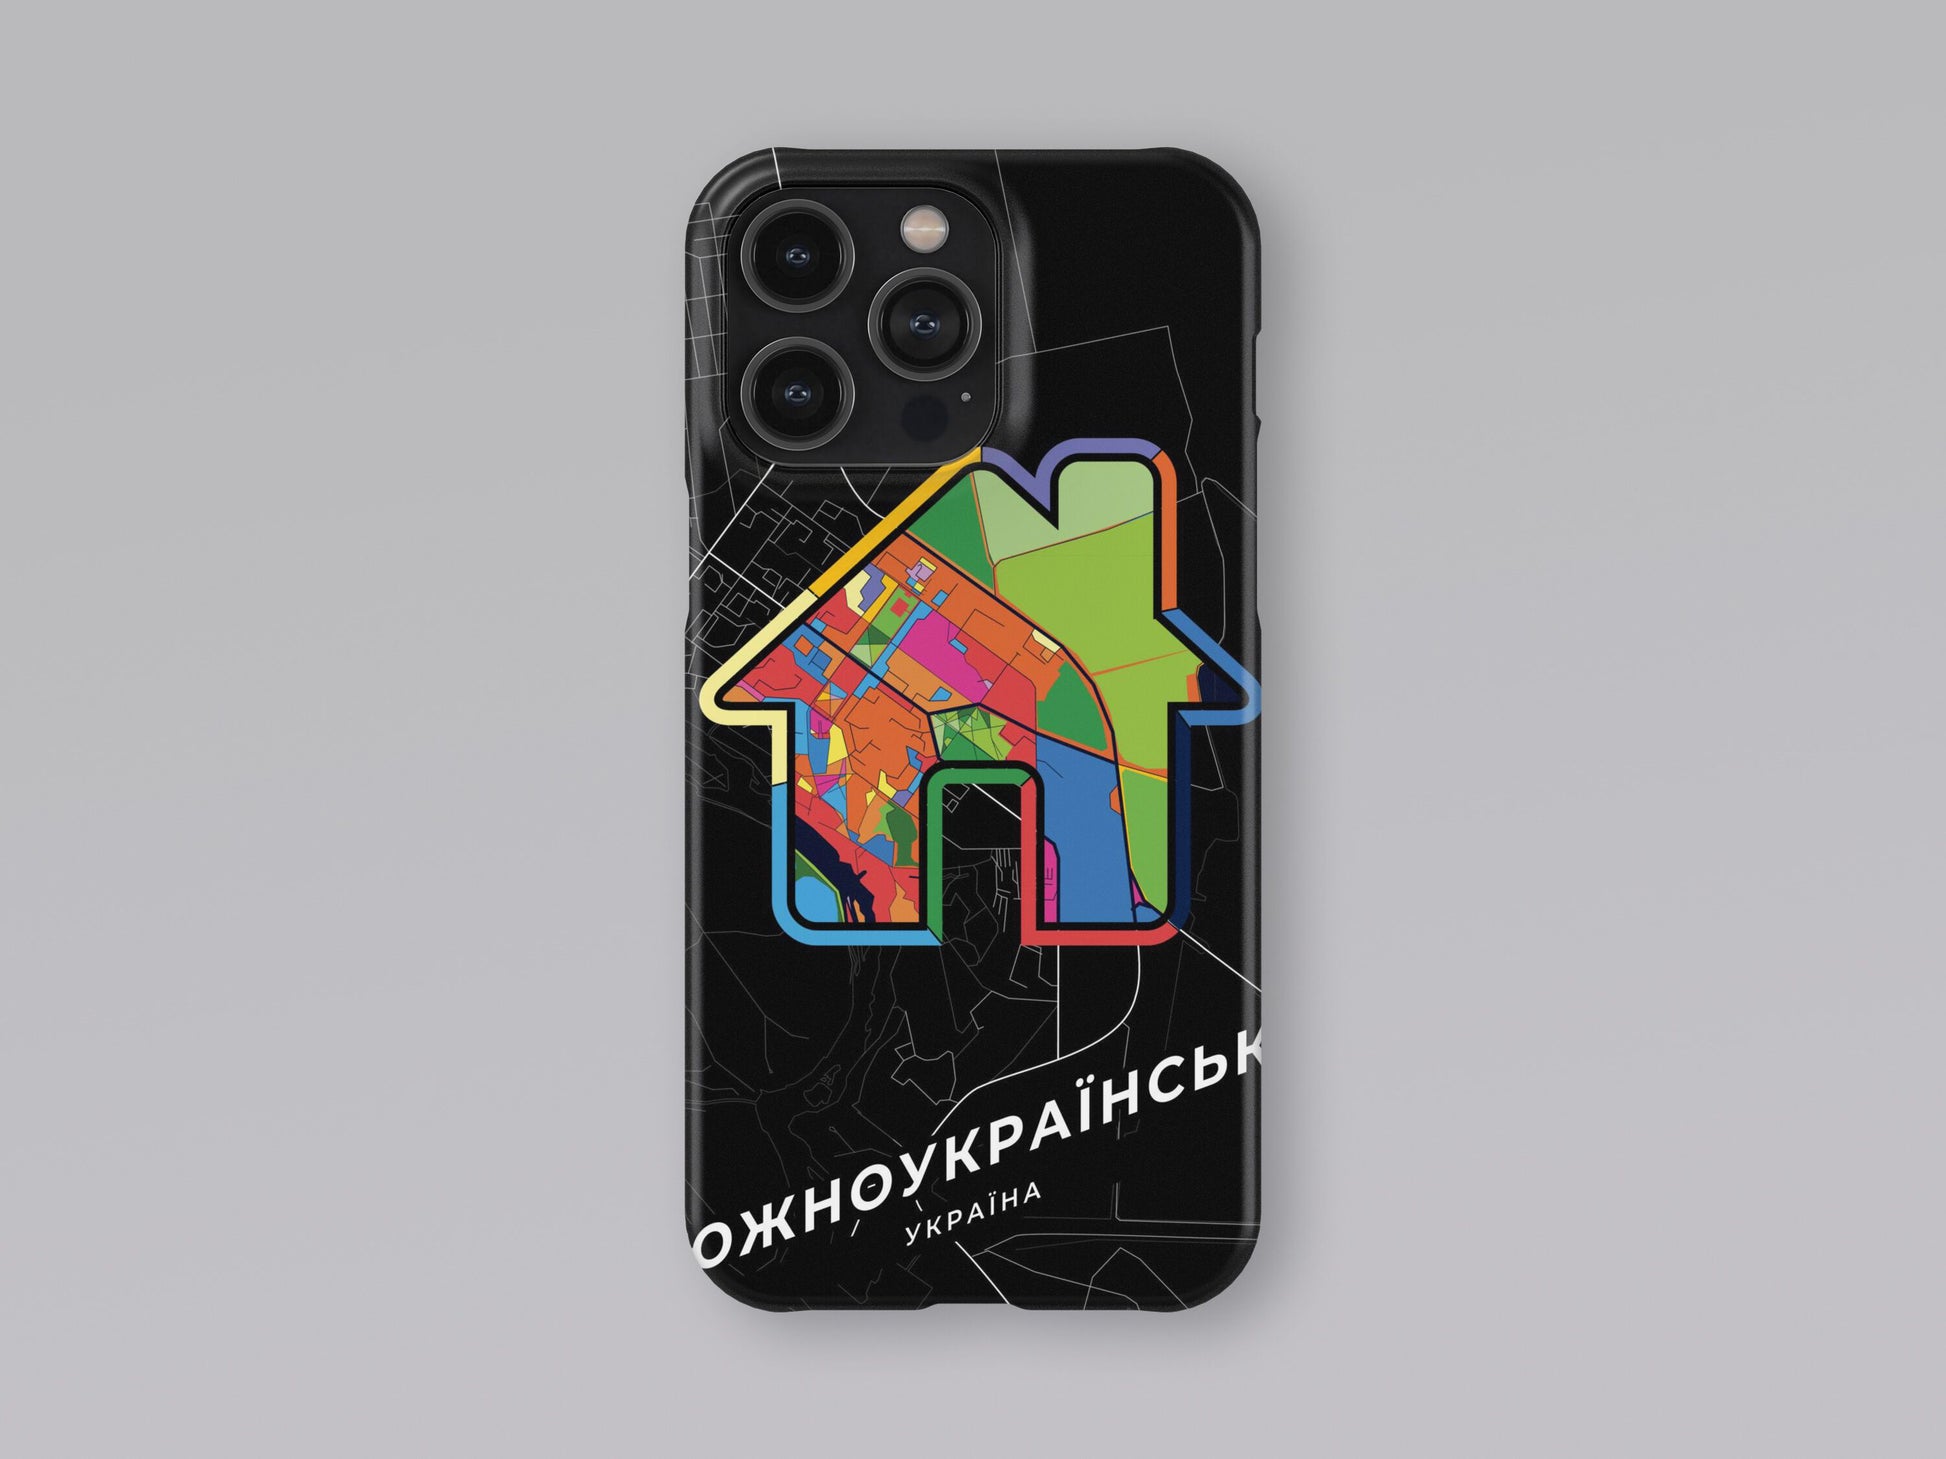 Yuzhnoukrainsk Ukraine slim phone case with colorful icon 3